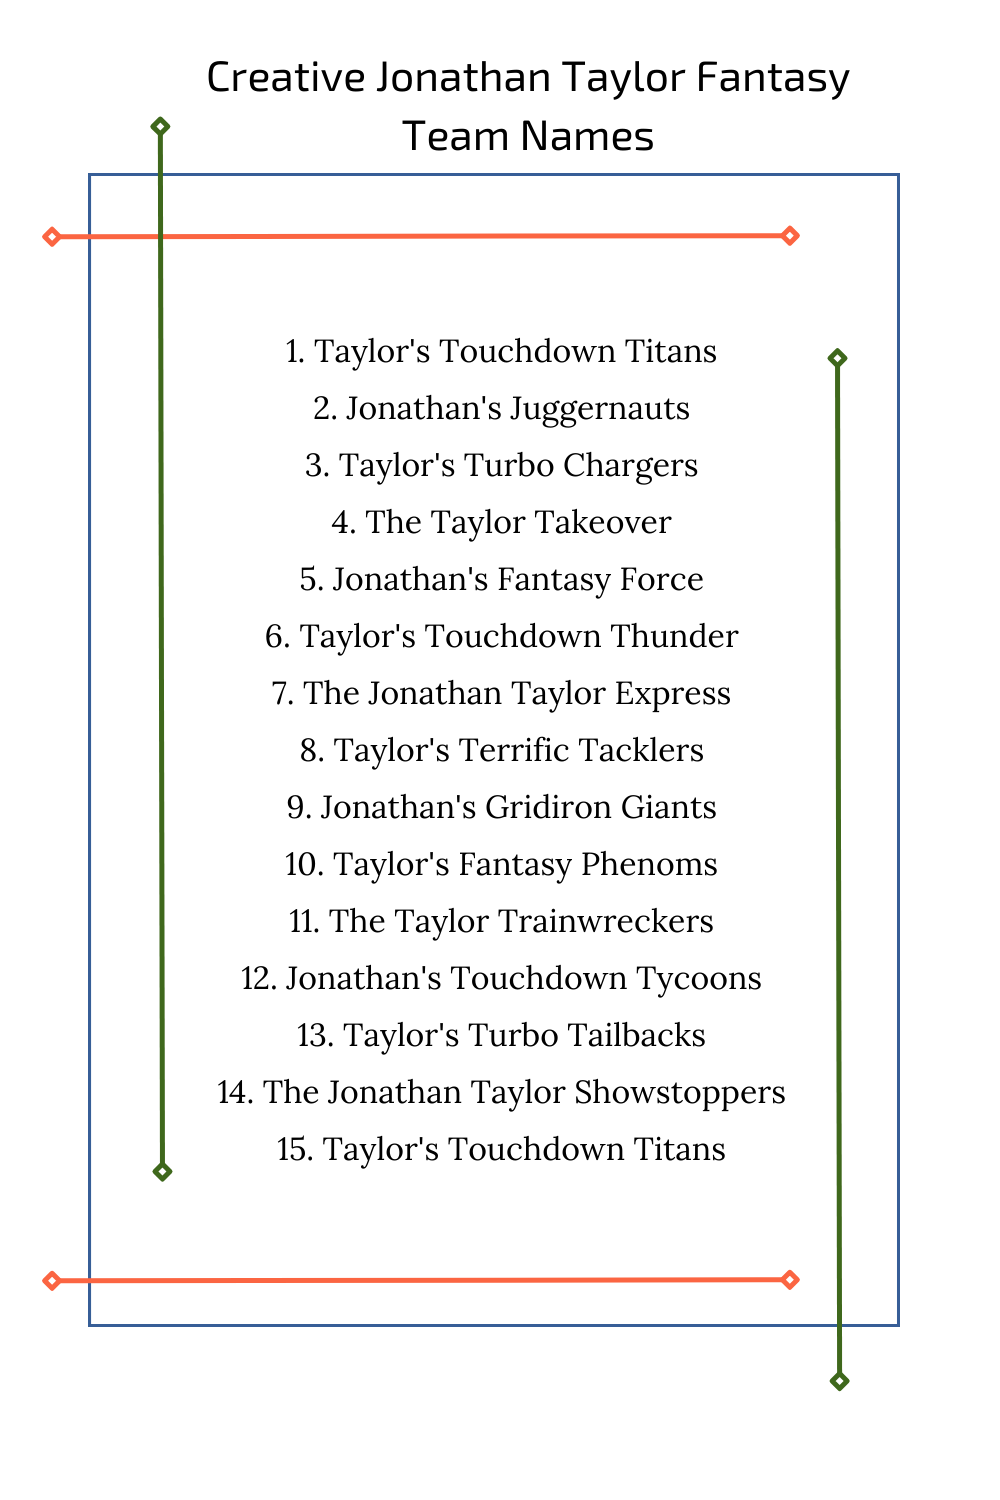 Creative Jonathan Taylor Fantasy Team Names